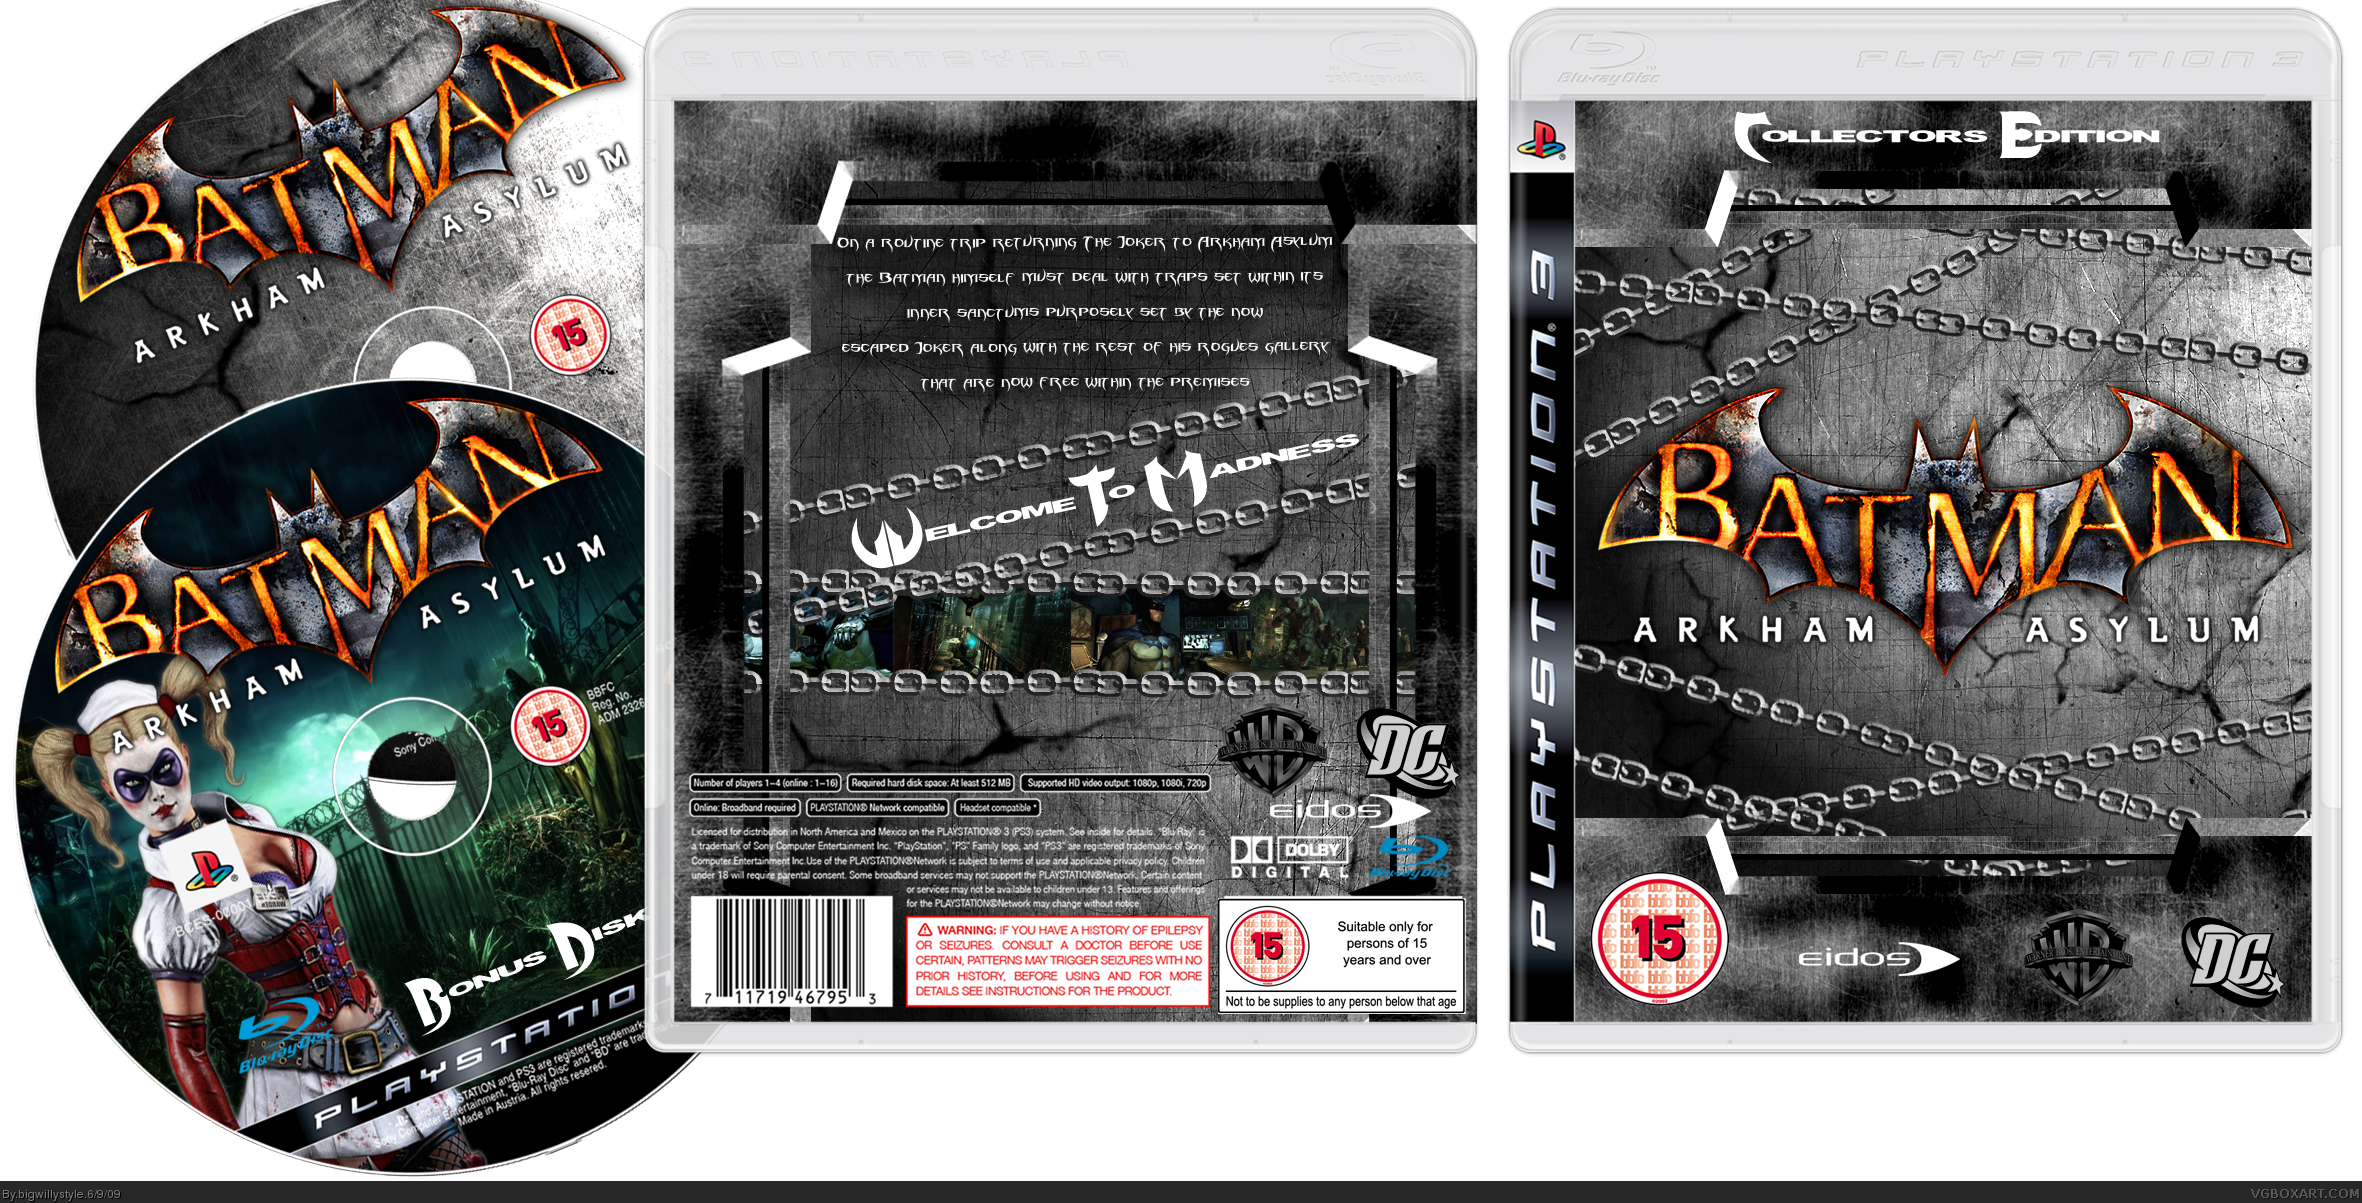 Batman: Arkham Asylum Collector's Edition box cover